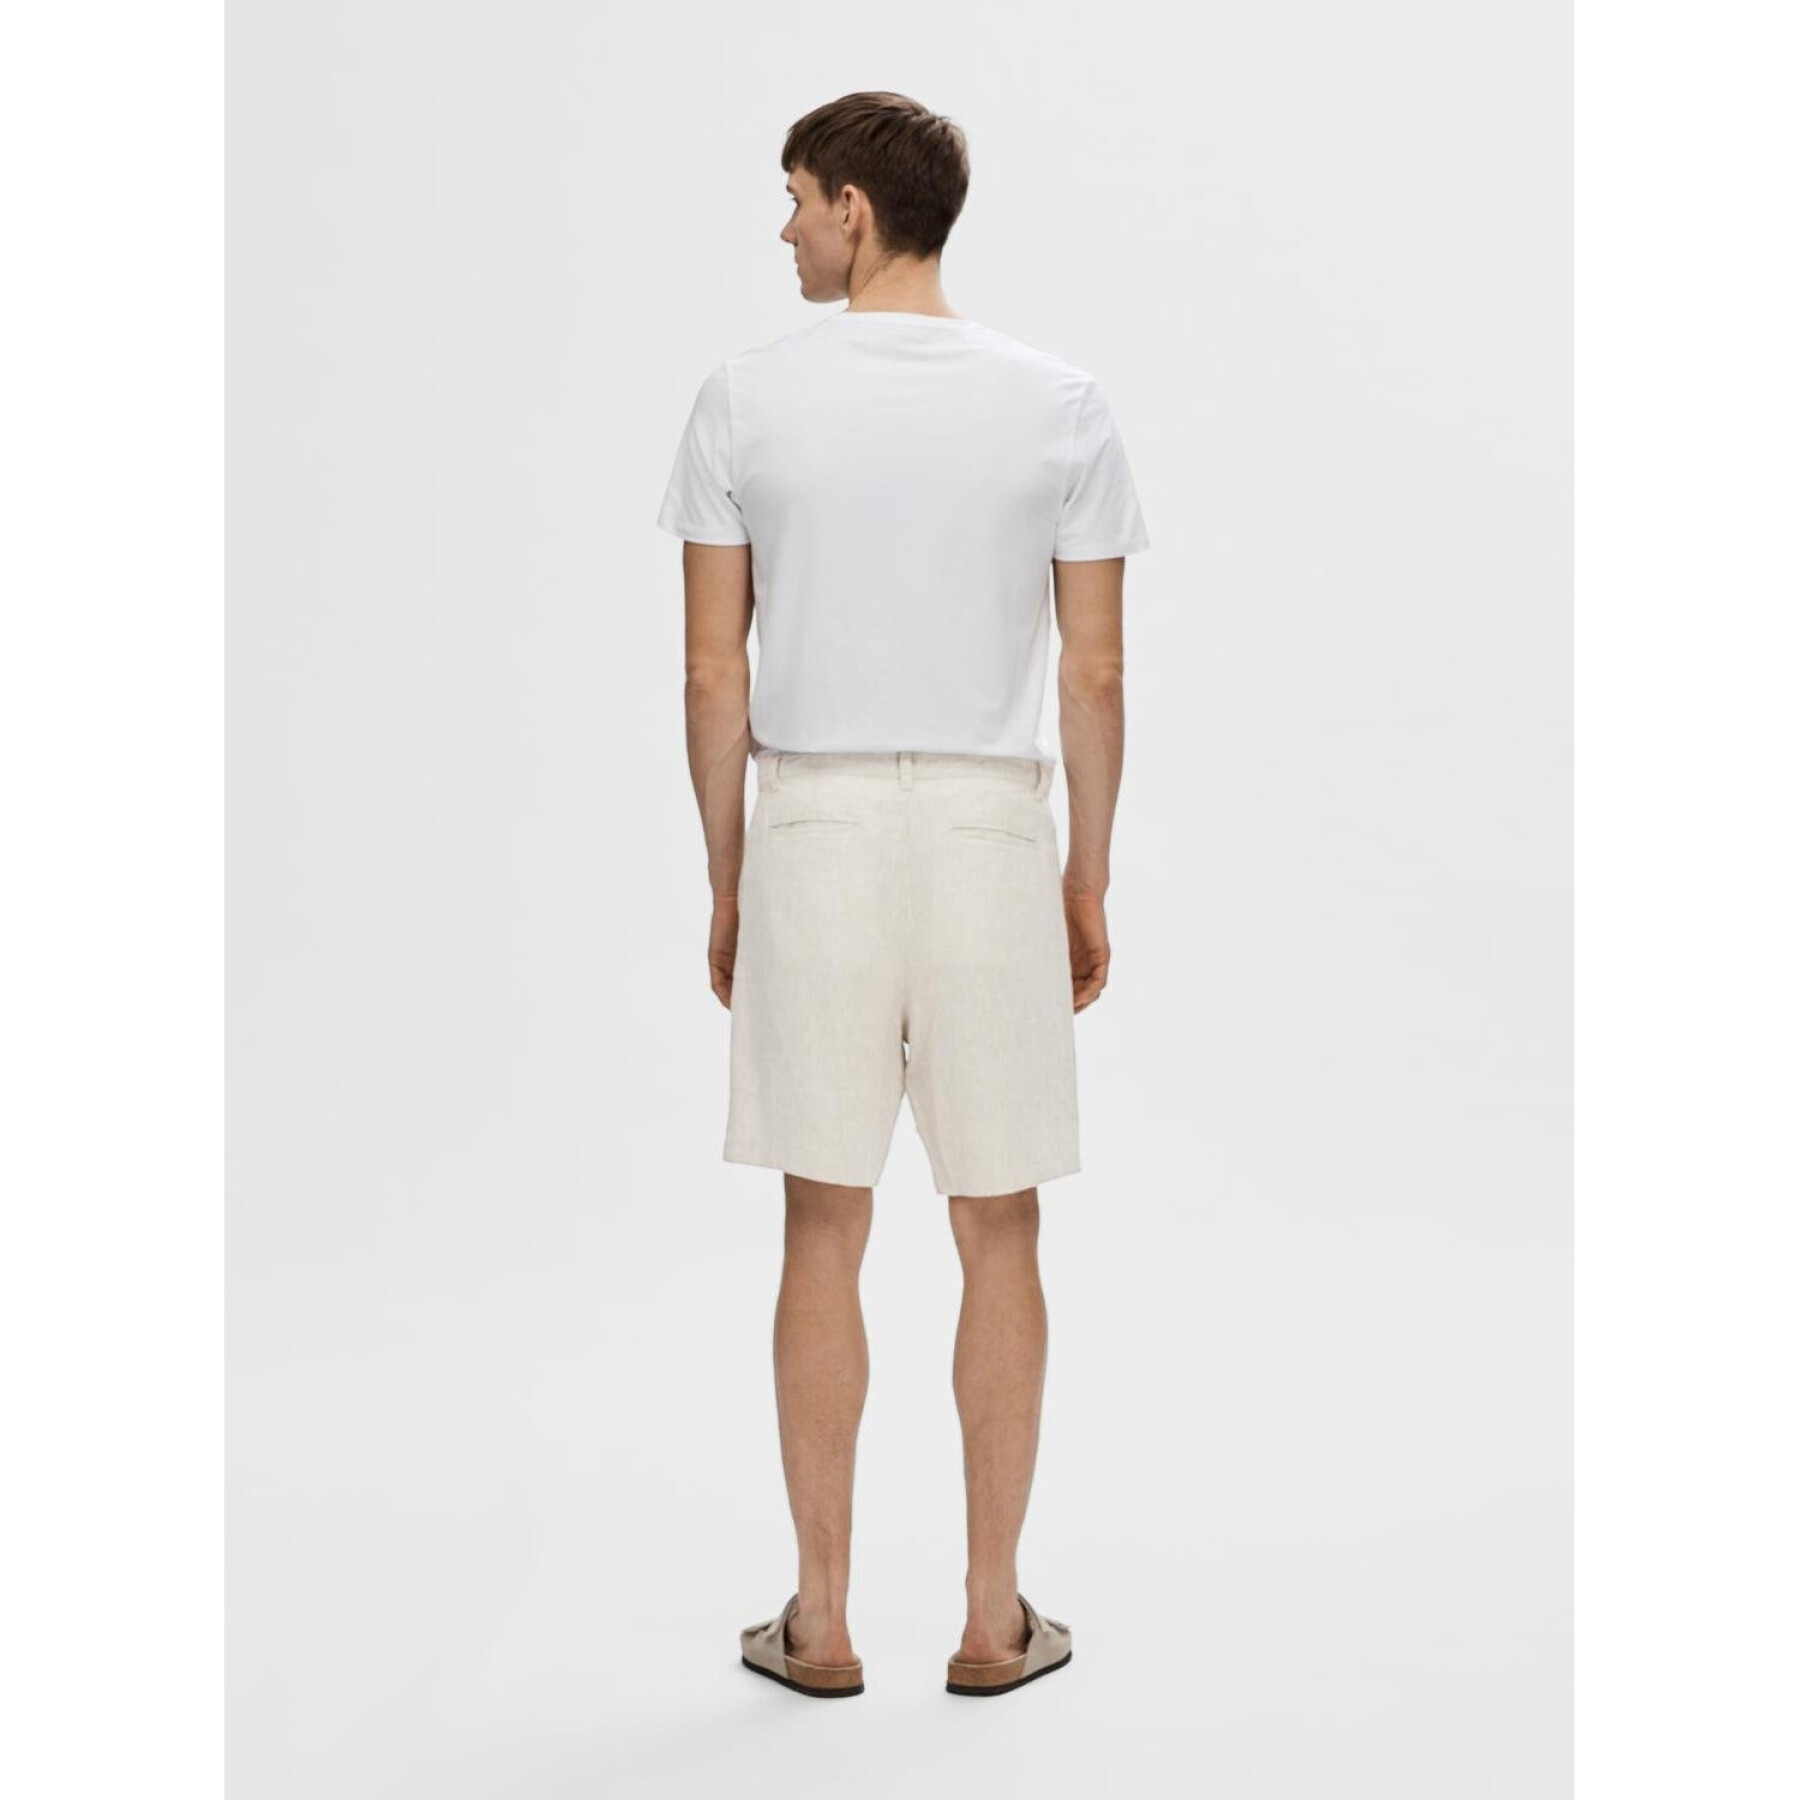 Pantalón corto Selected Regular-Mads Linen